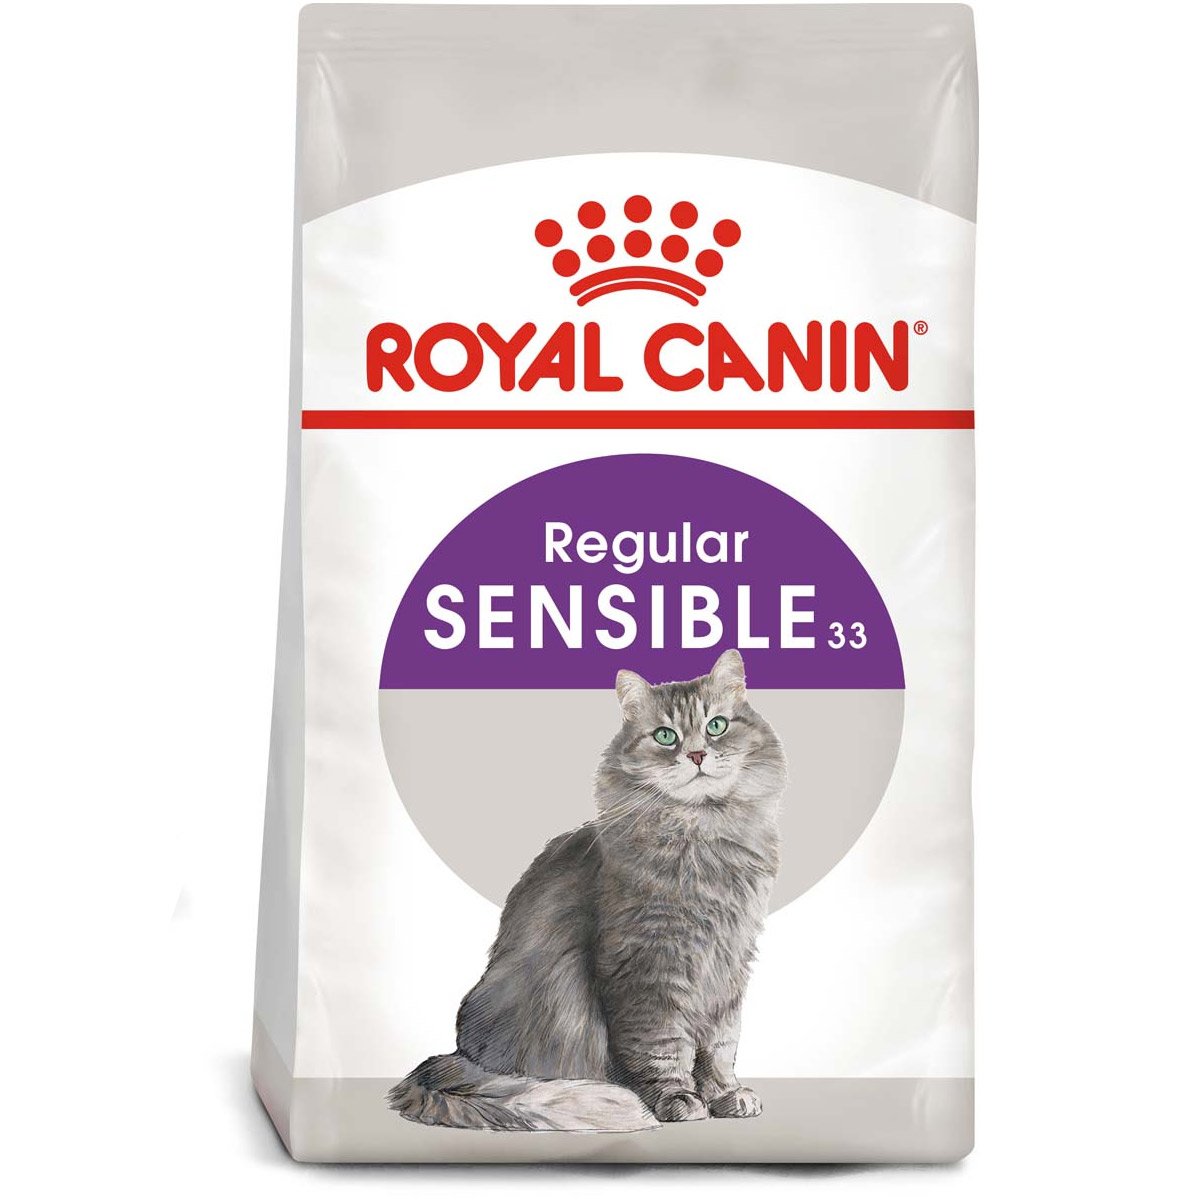 ROYAL CANIN SENSIBLE Trockenfutter für sensible Katzen 10kg+2kg gratis von Royal Canin